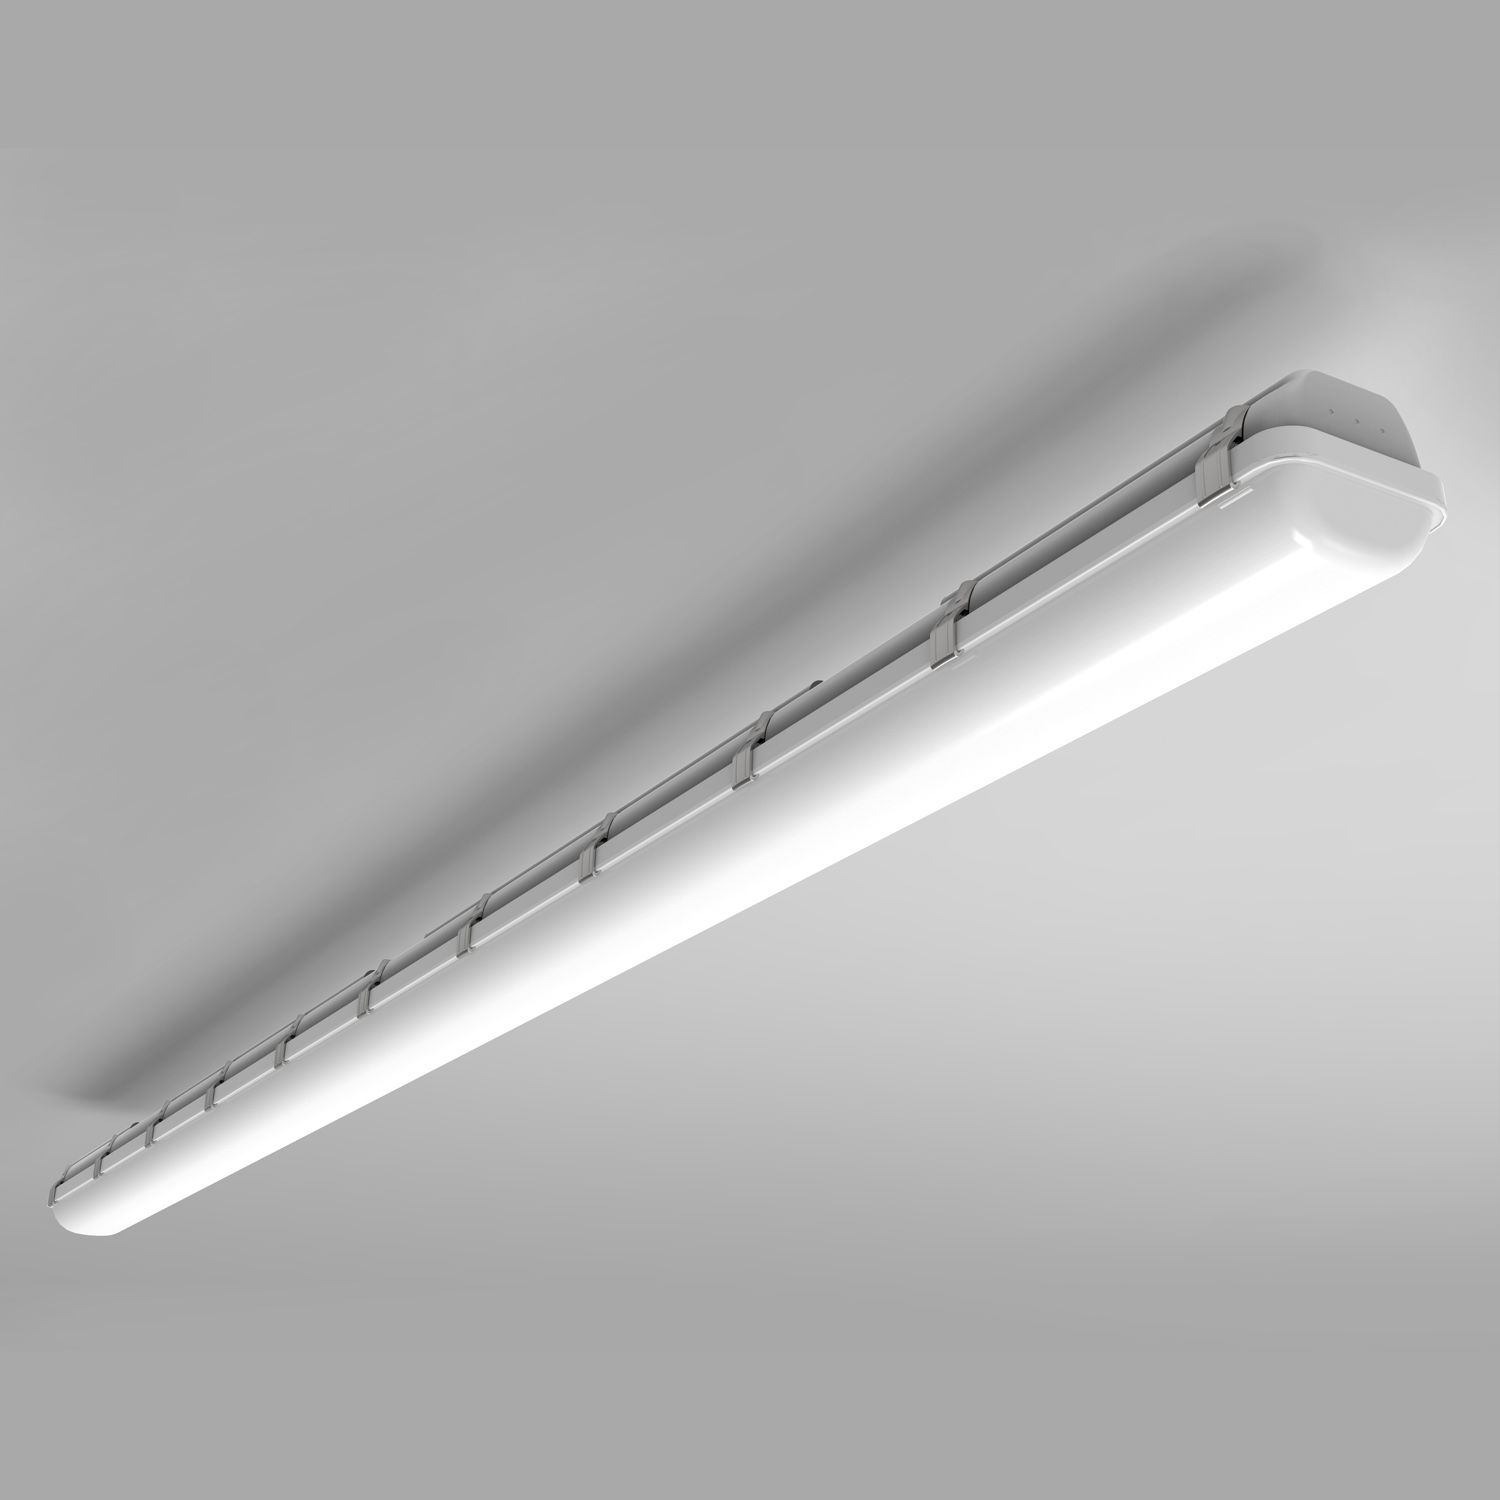 K8W 8ft vapor tight light LED triproof light IP66 waterproof light